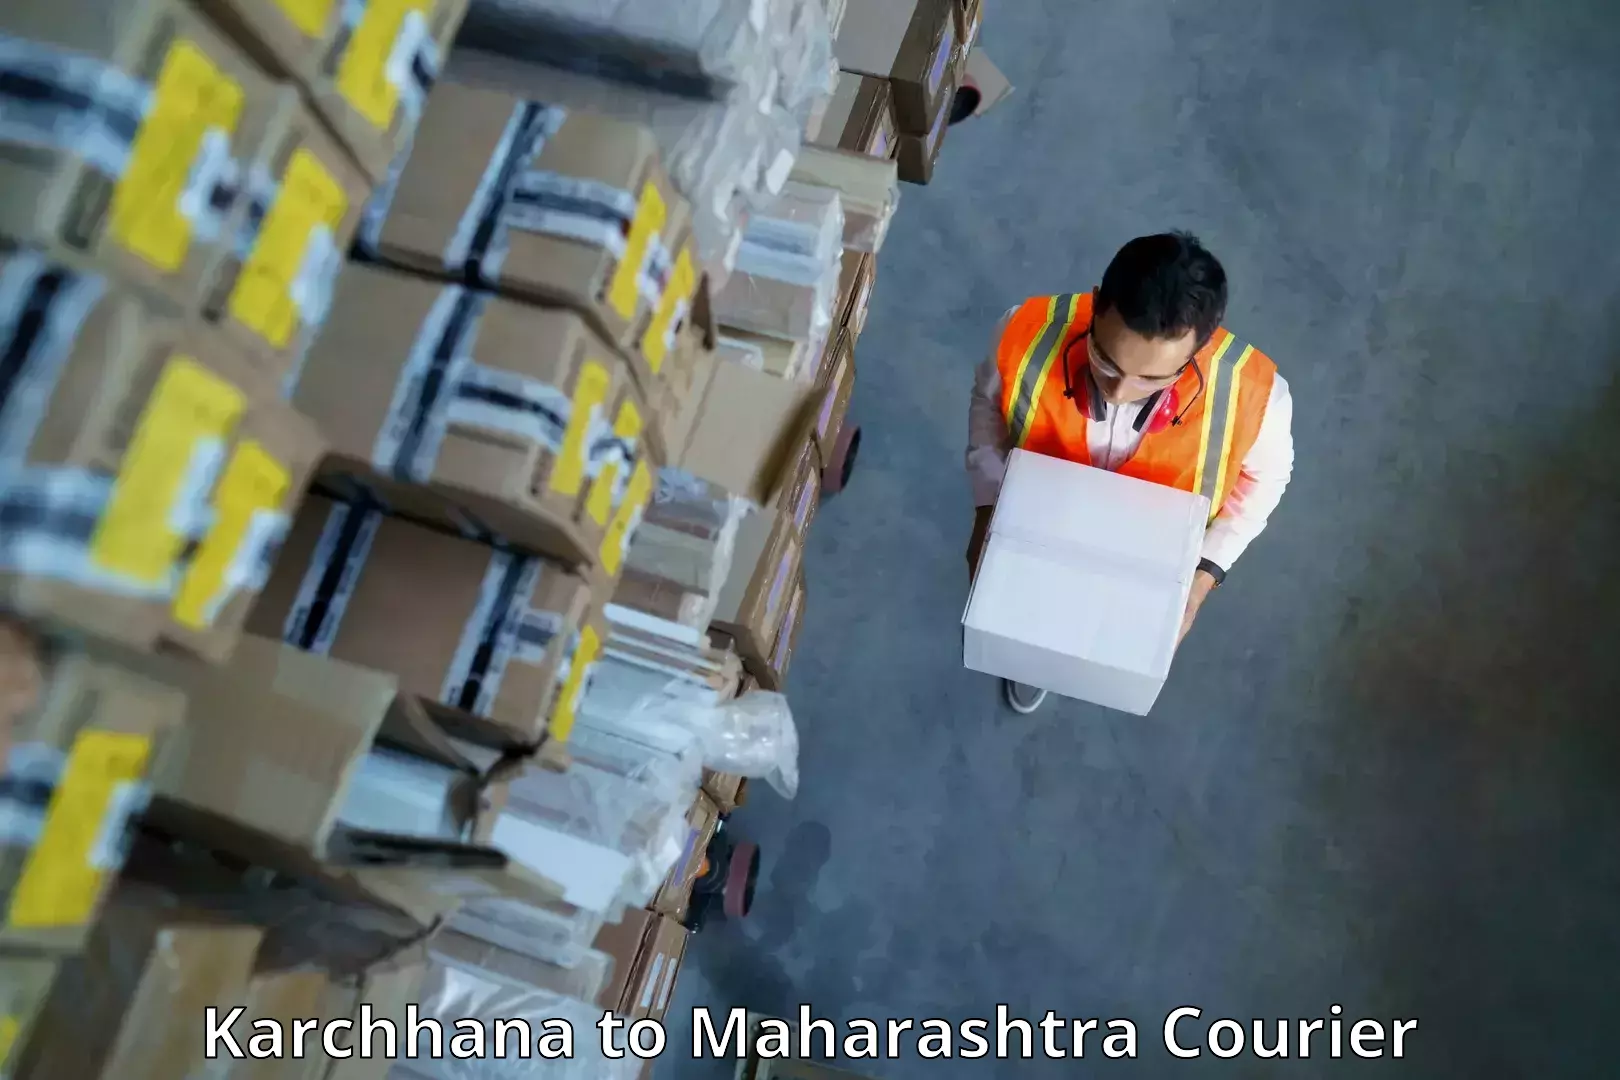 Package forwarding in Karchhana to Pune